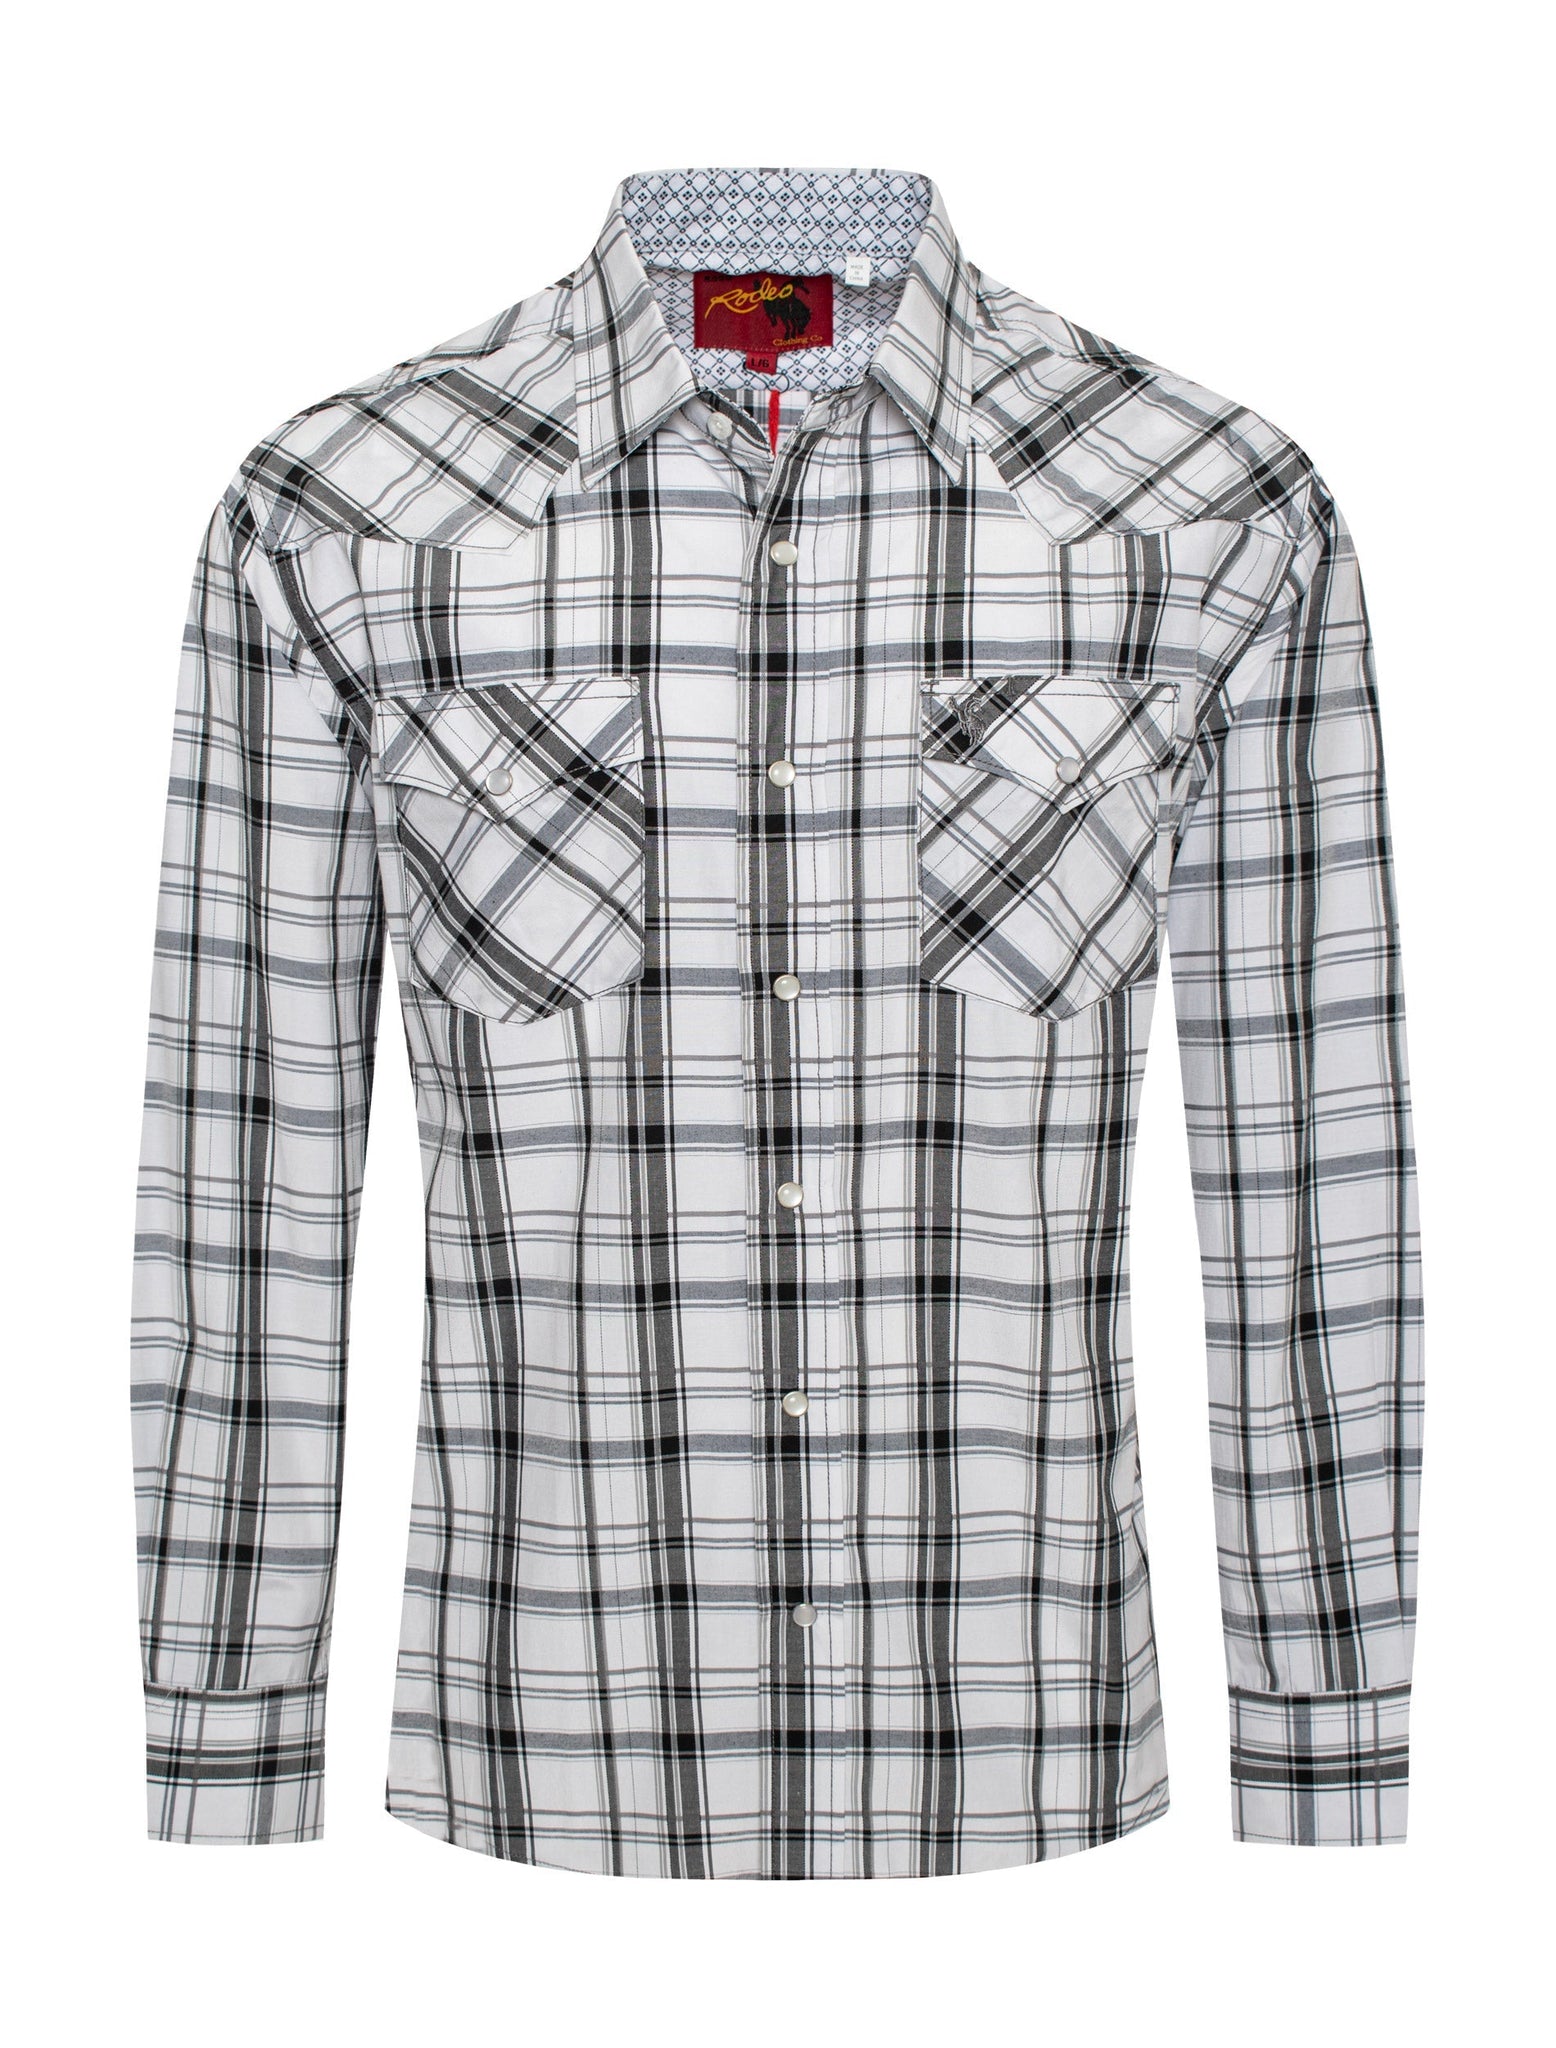 Men's Western Long Sleeve Pearl Snap Plaid Shirt-PS400-414